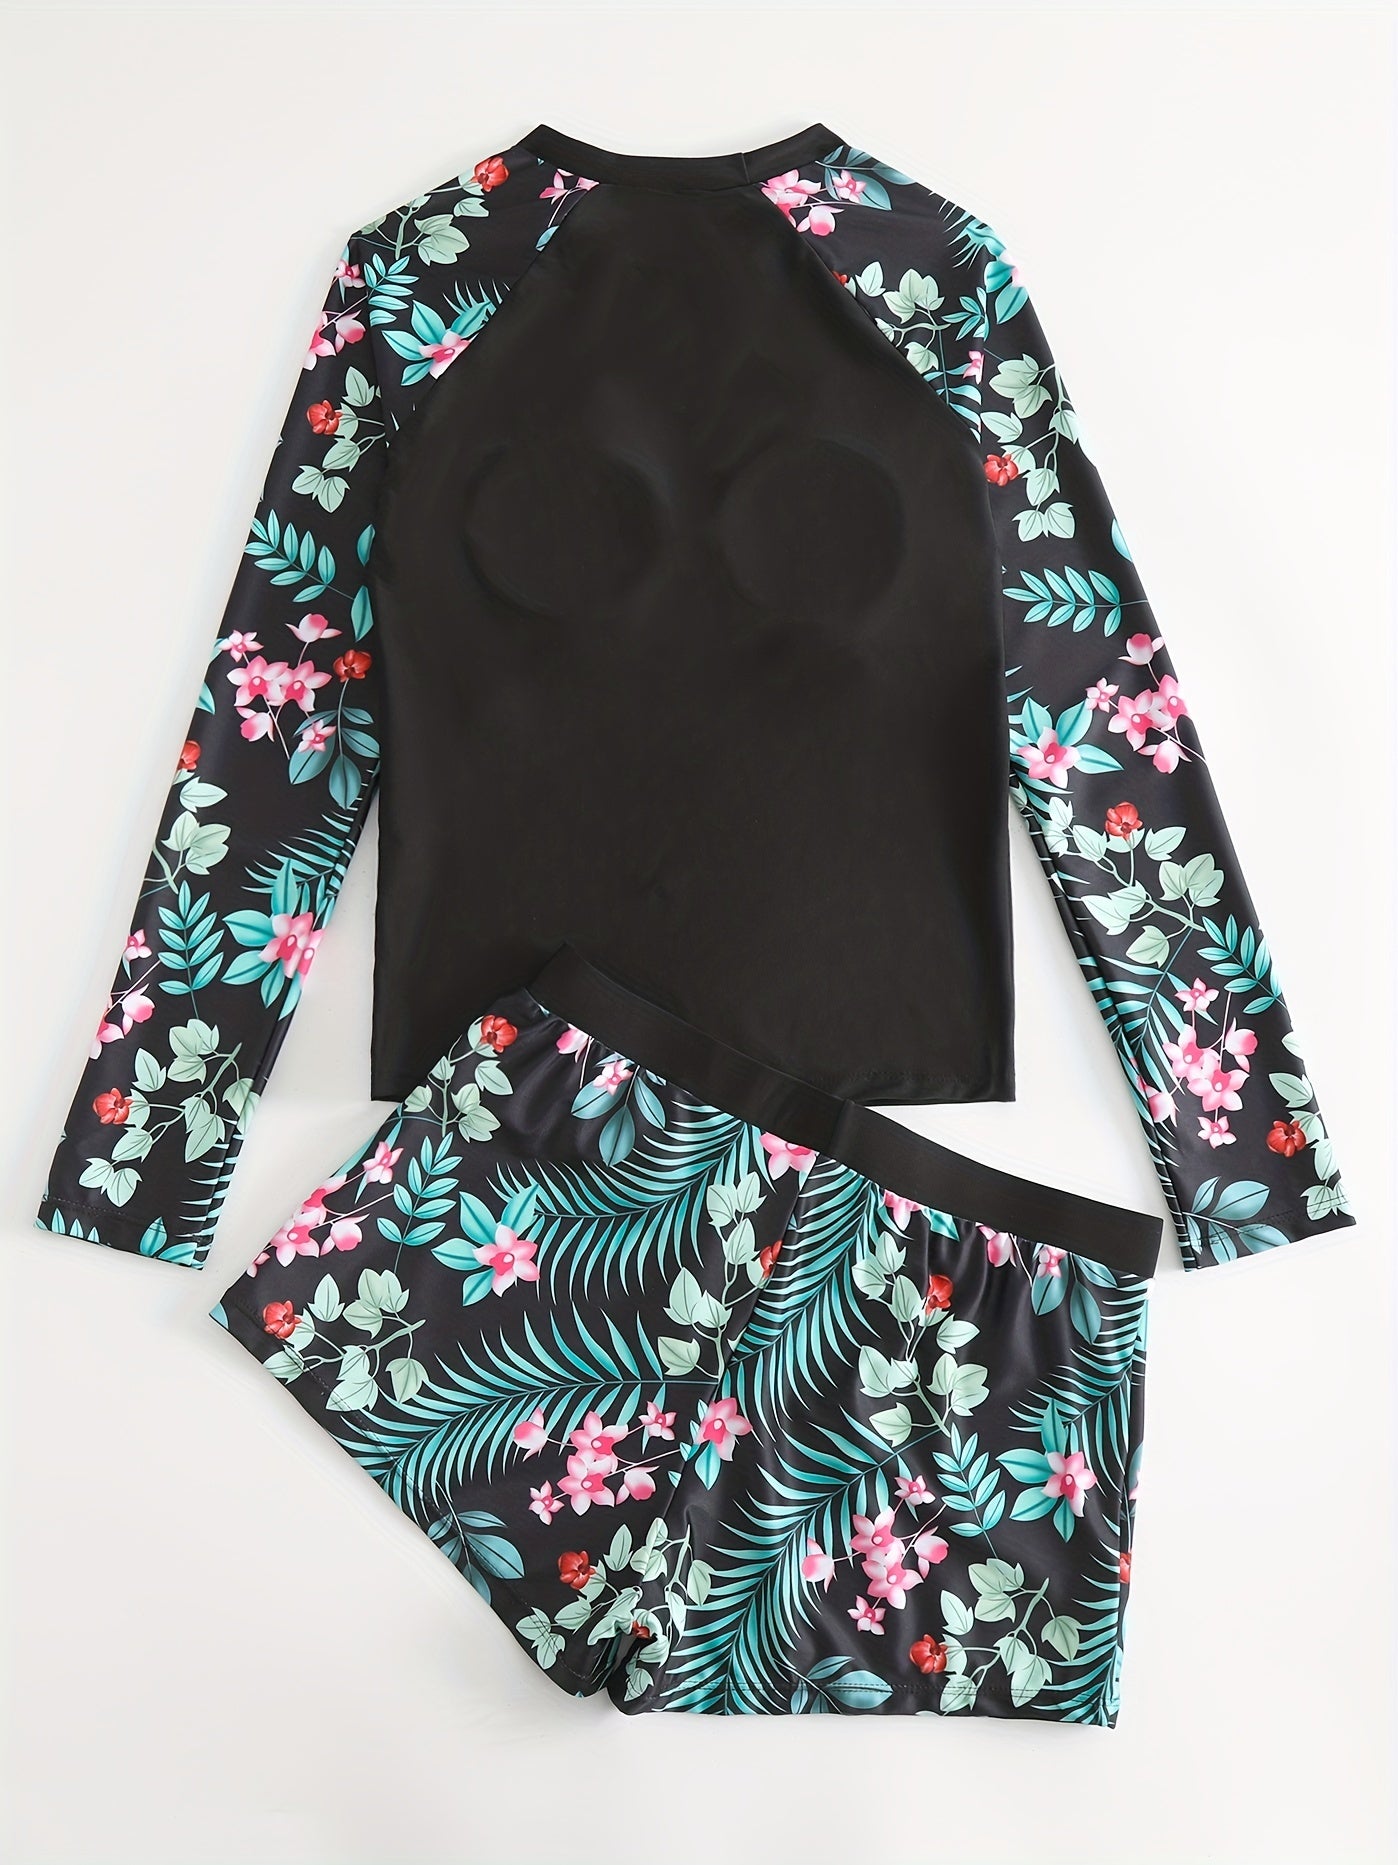 「binfenxie」Colorblock Tropical Print Tankini Sets, Long Sleeves Round Neck Rash Guard Boxer Short Bottom Two Pieces Swimsuit, Women's Swimwear & Clothing